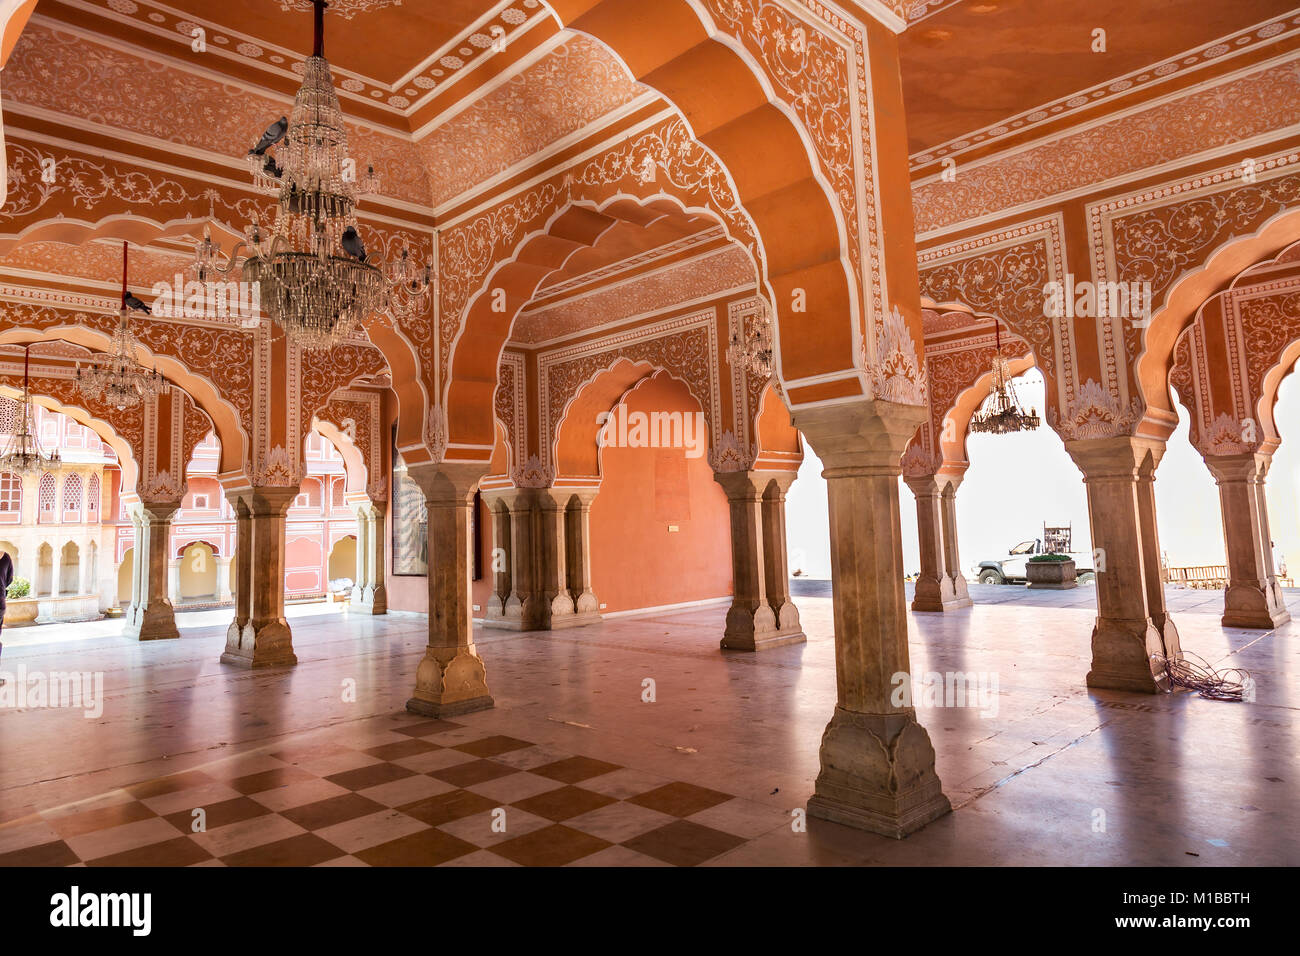 Chandra Mahal im City Palace Jaipur Rajasthan Flur mit filigranen Kunstwerke an den Wänden und Säulen. Stockfoto